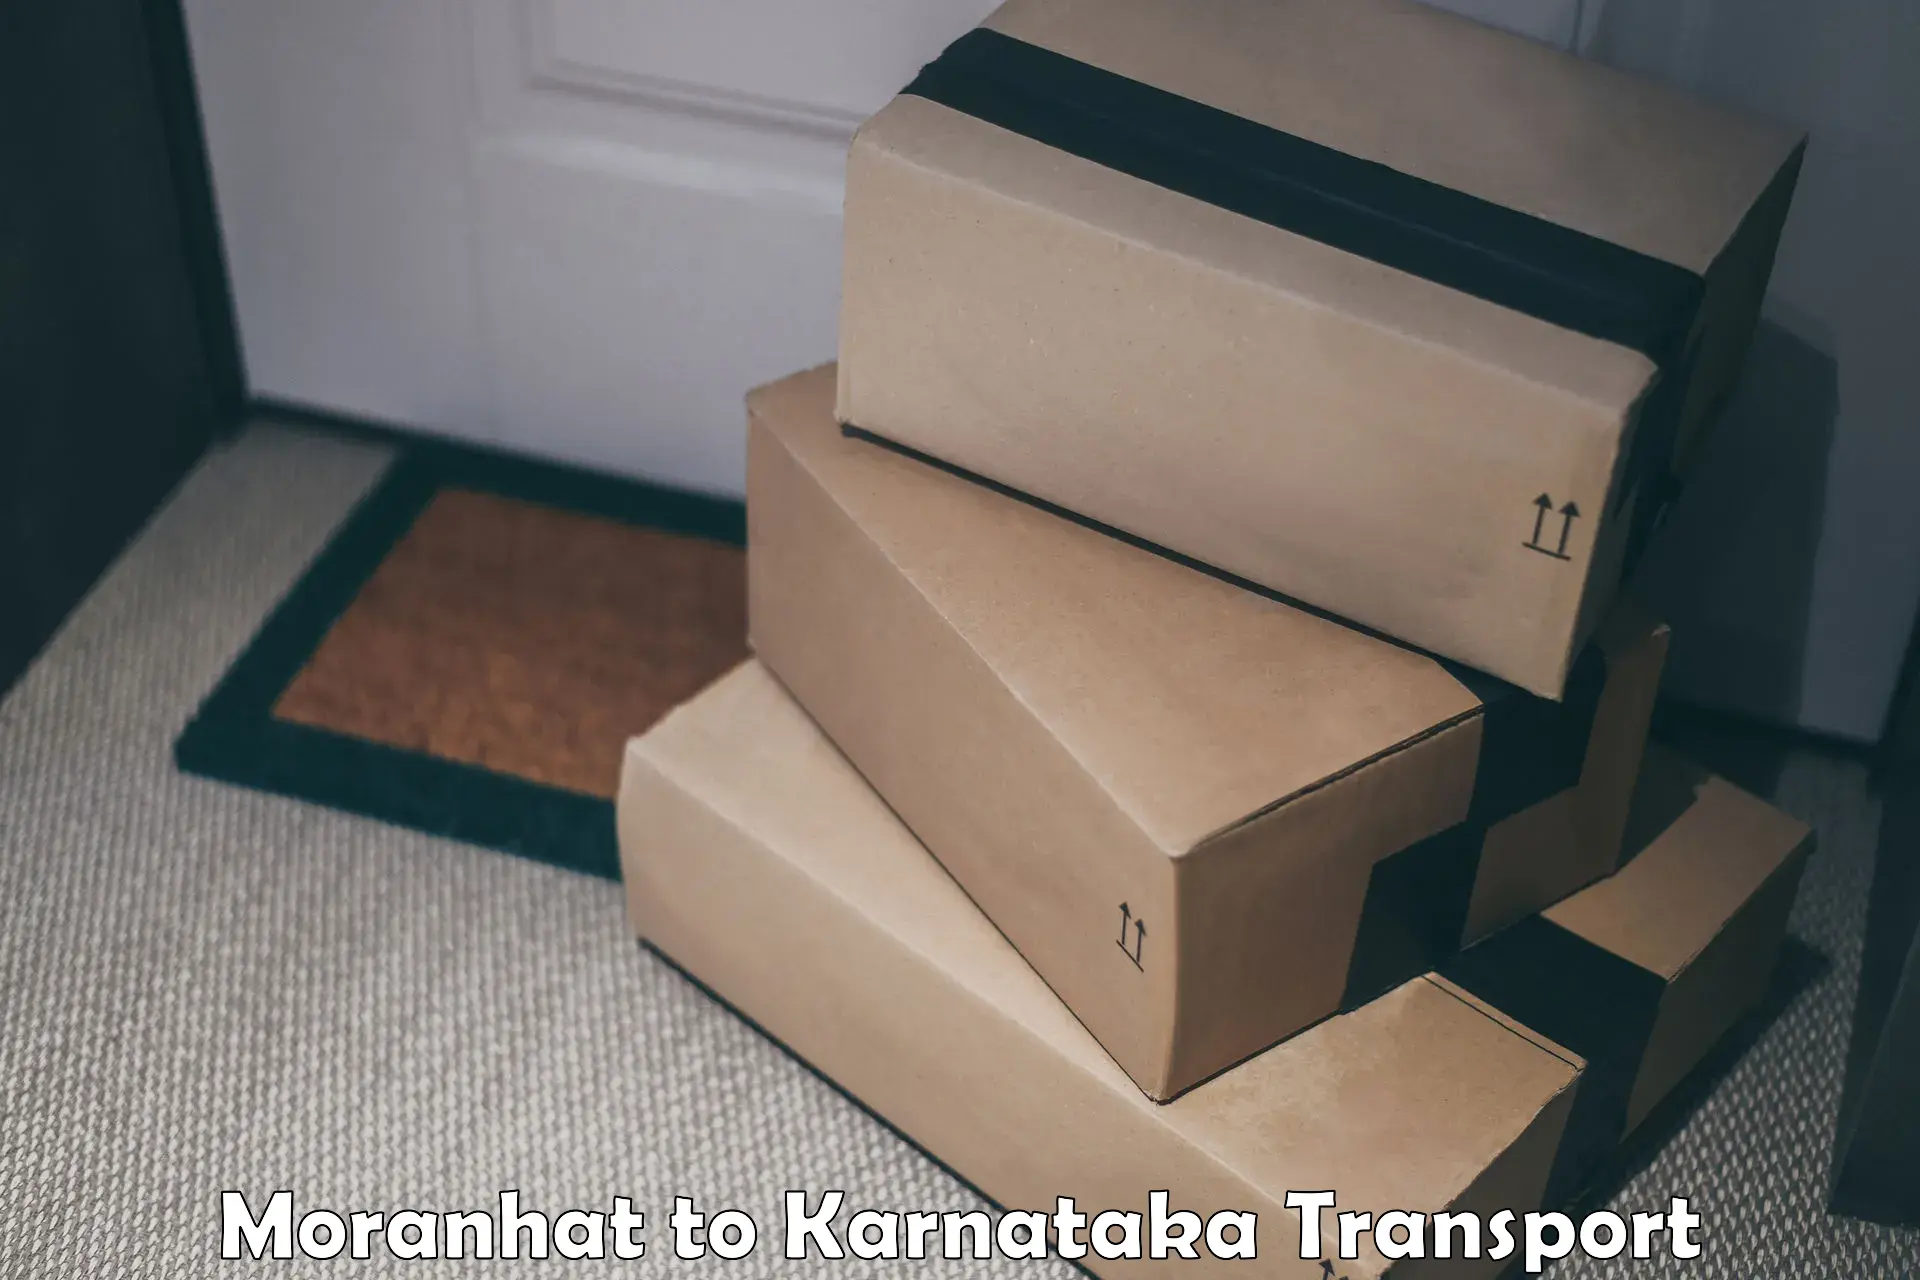 Furniture transport service Moranhat to Mangalore Port